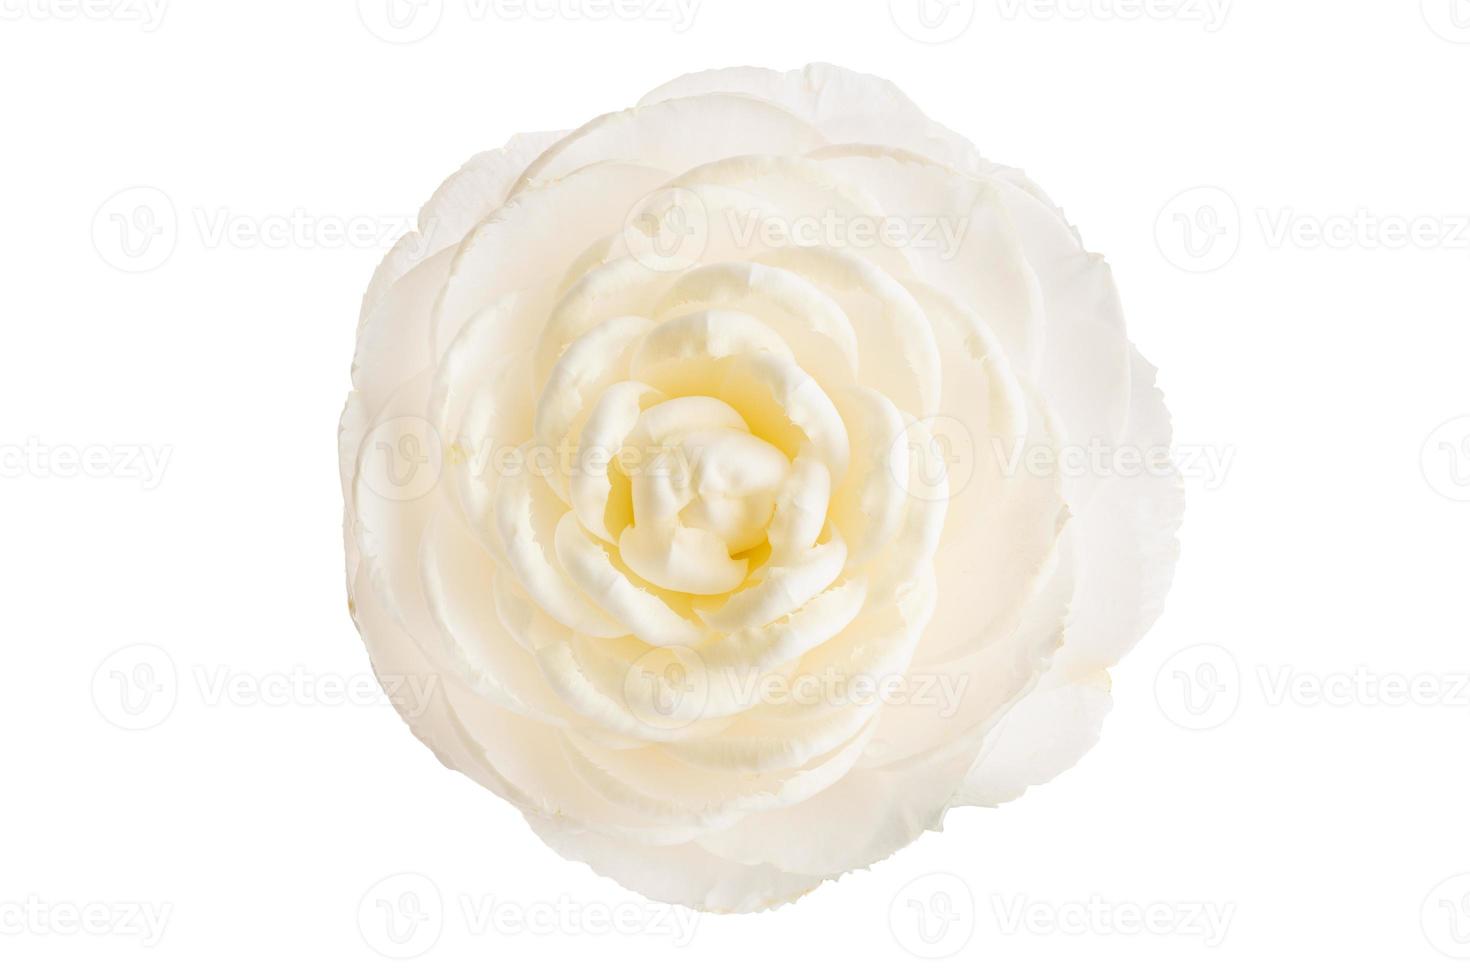 Fully bloom White camellia flower isolated on white background photo